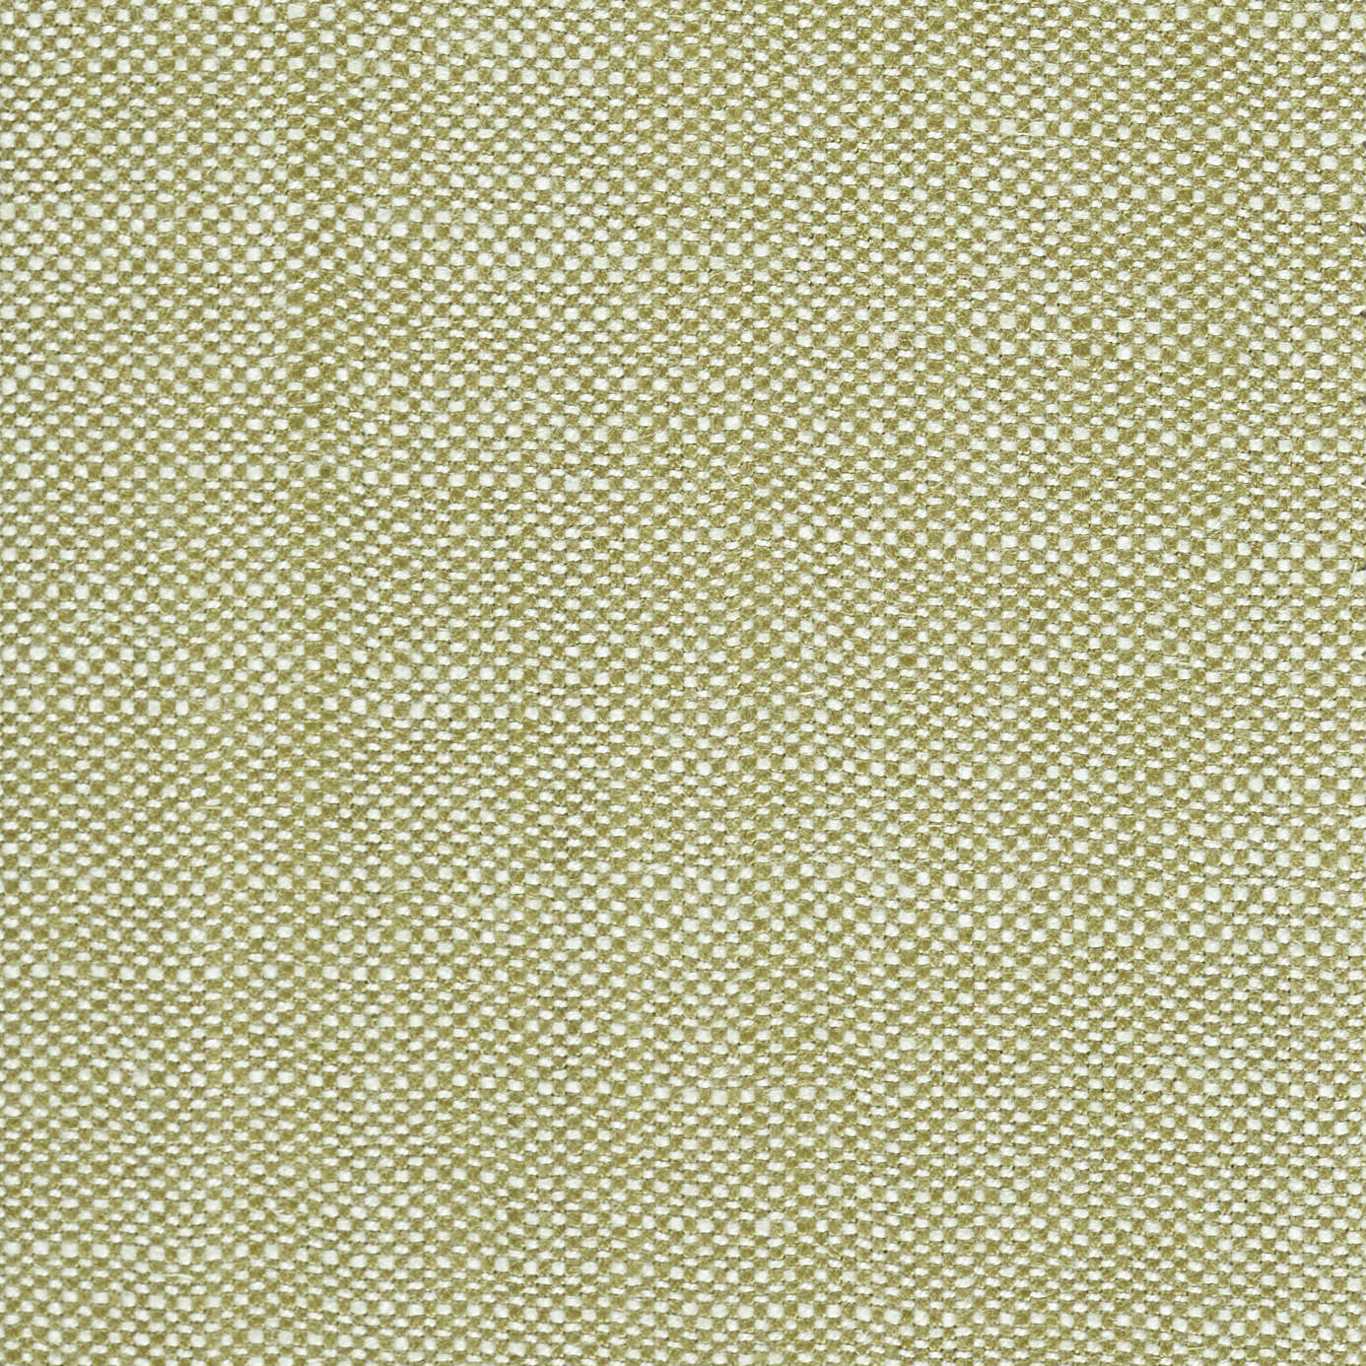 Atom Fabric by Harlequin - HTEX440007 - Wicker